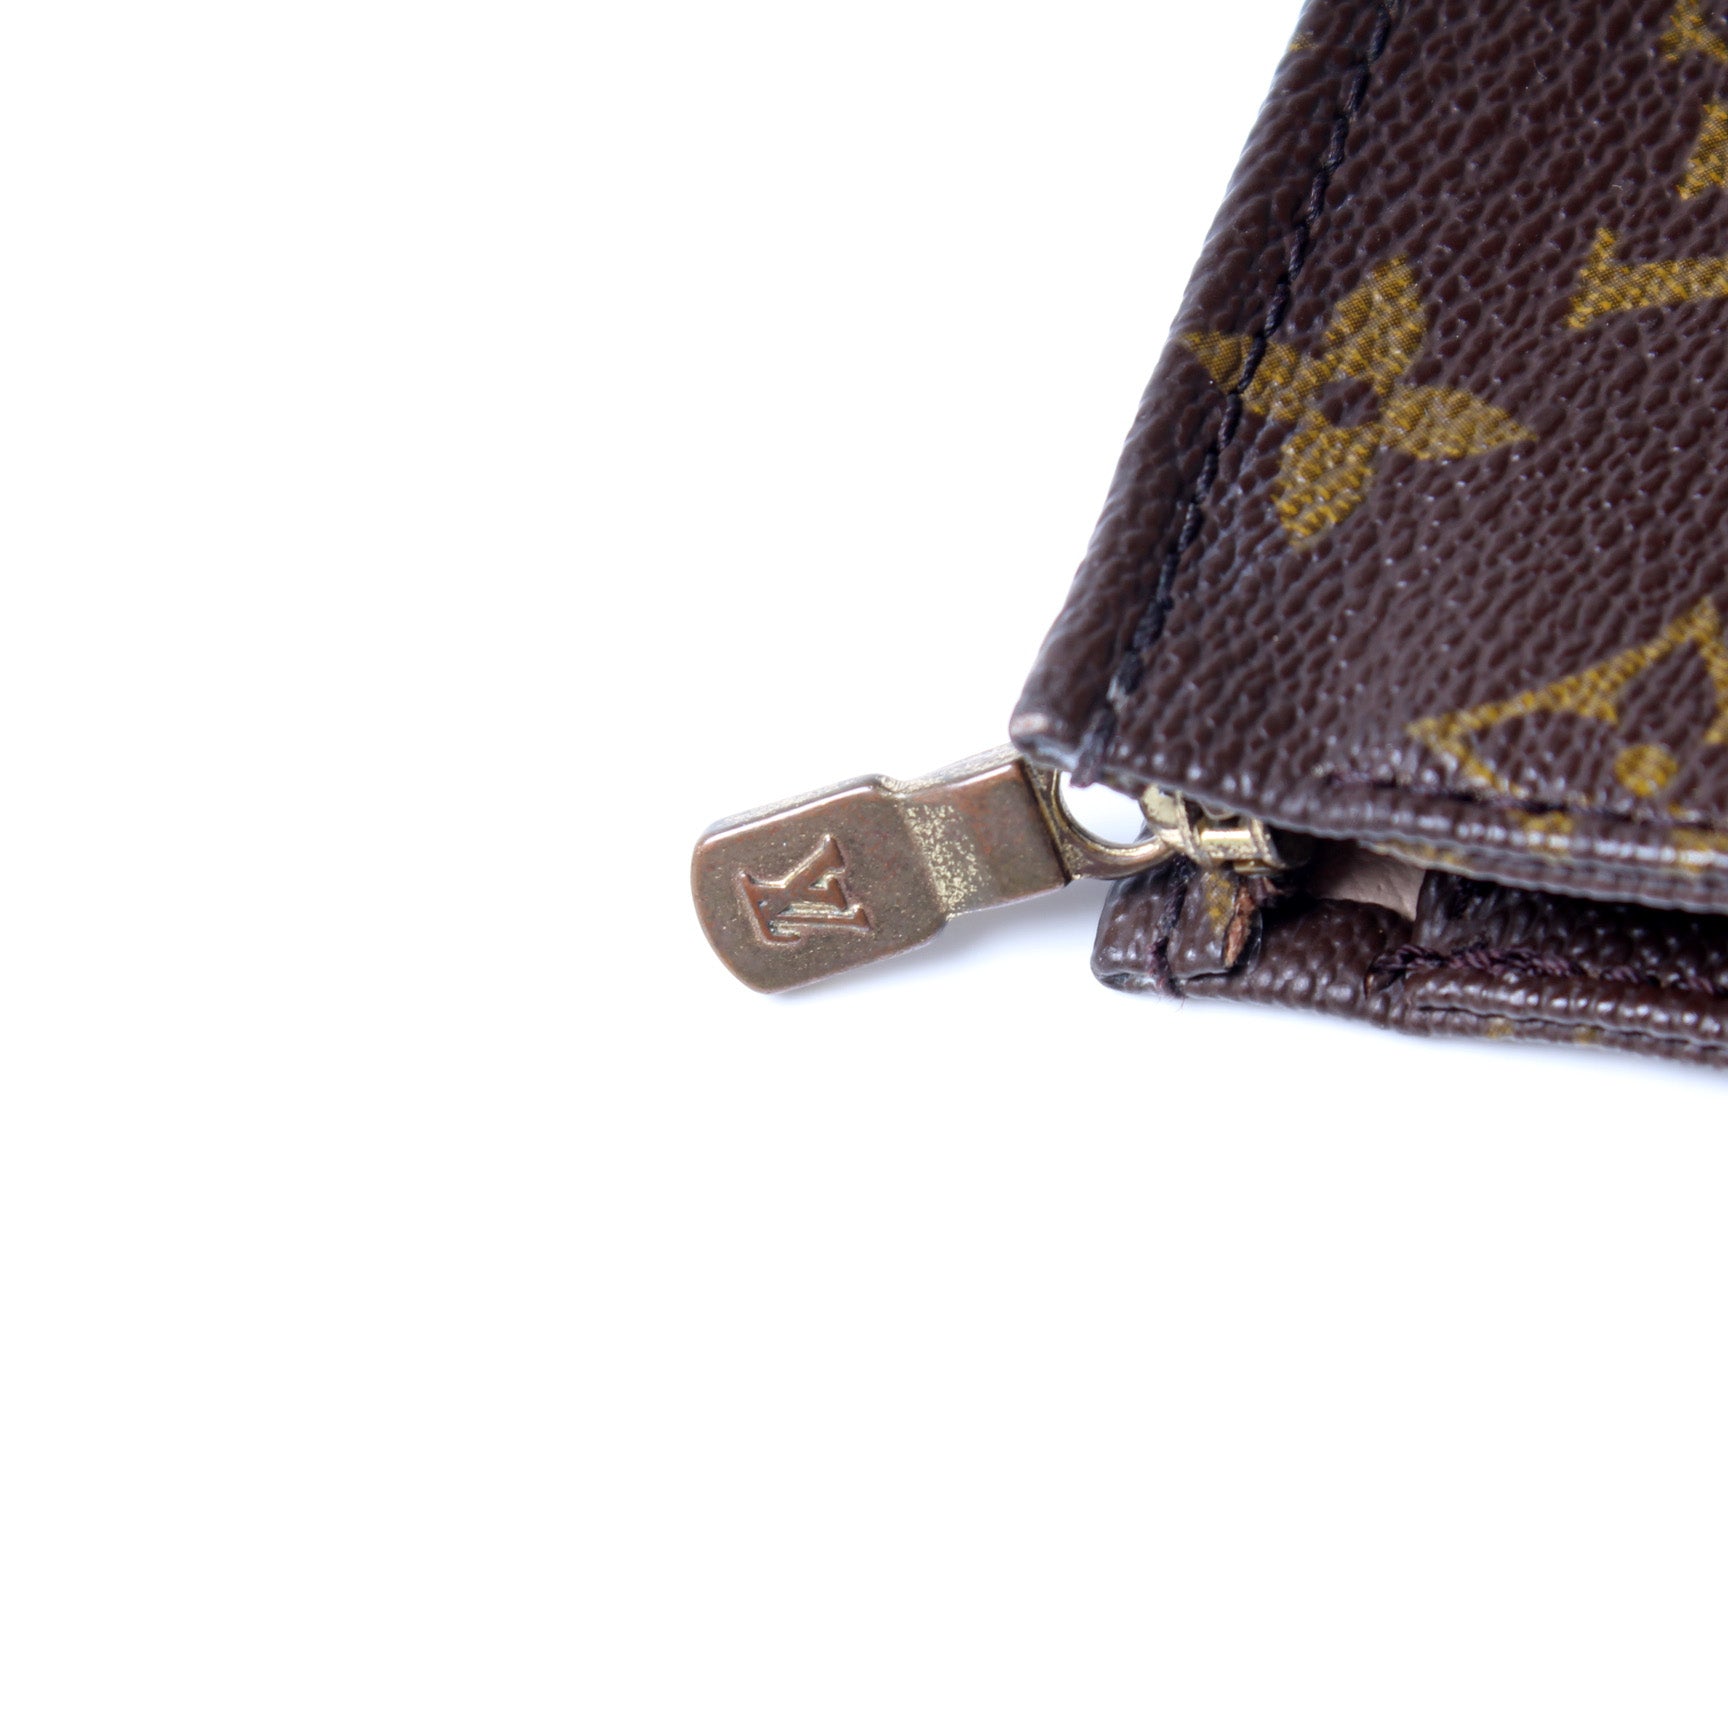 Etui Voyage Pouch PM Monogram – Keeks Designer Handbags